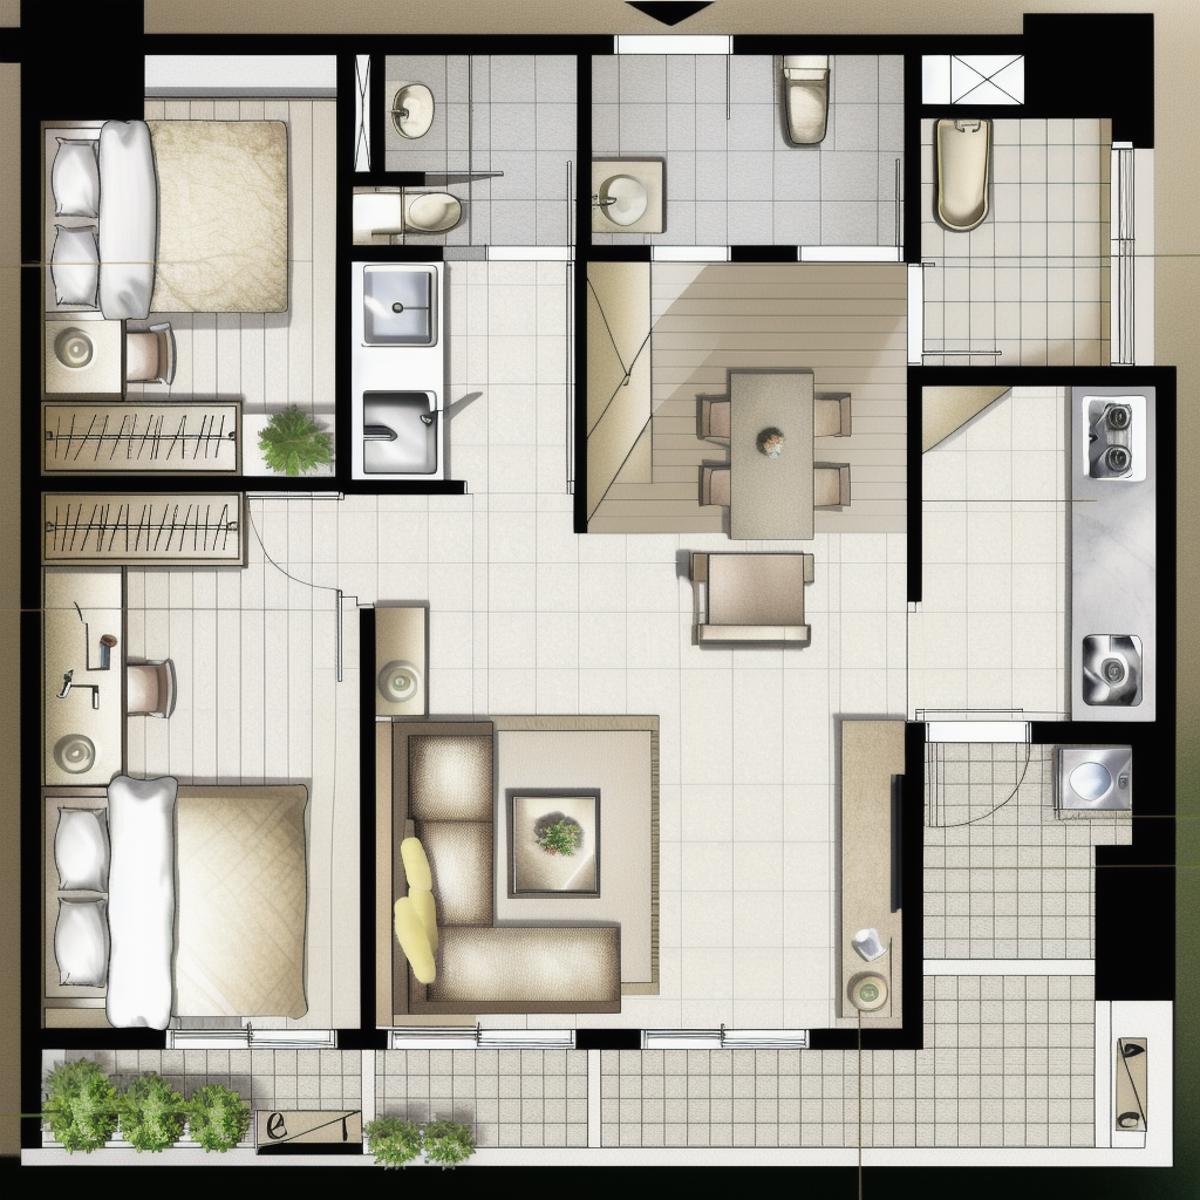 JJ's Drawing- Floor Plan image by yfarch